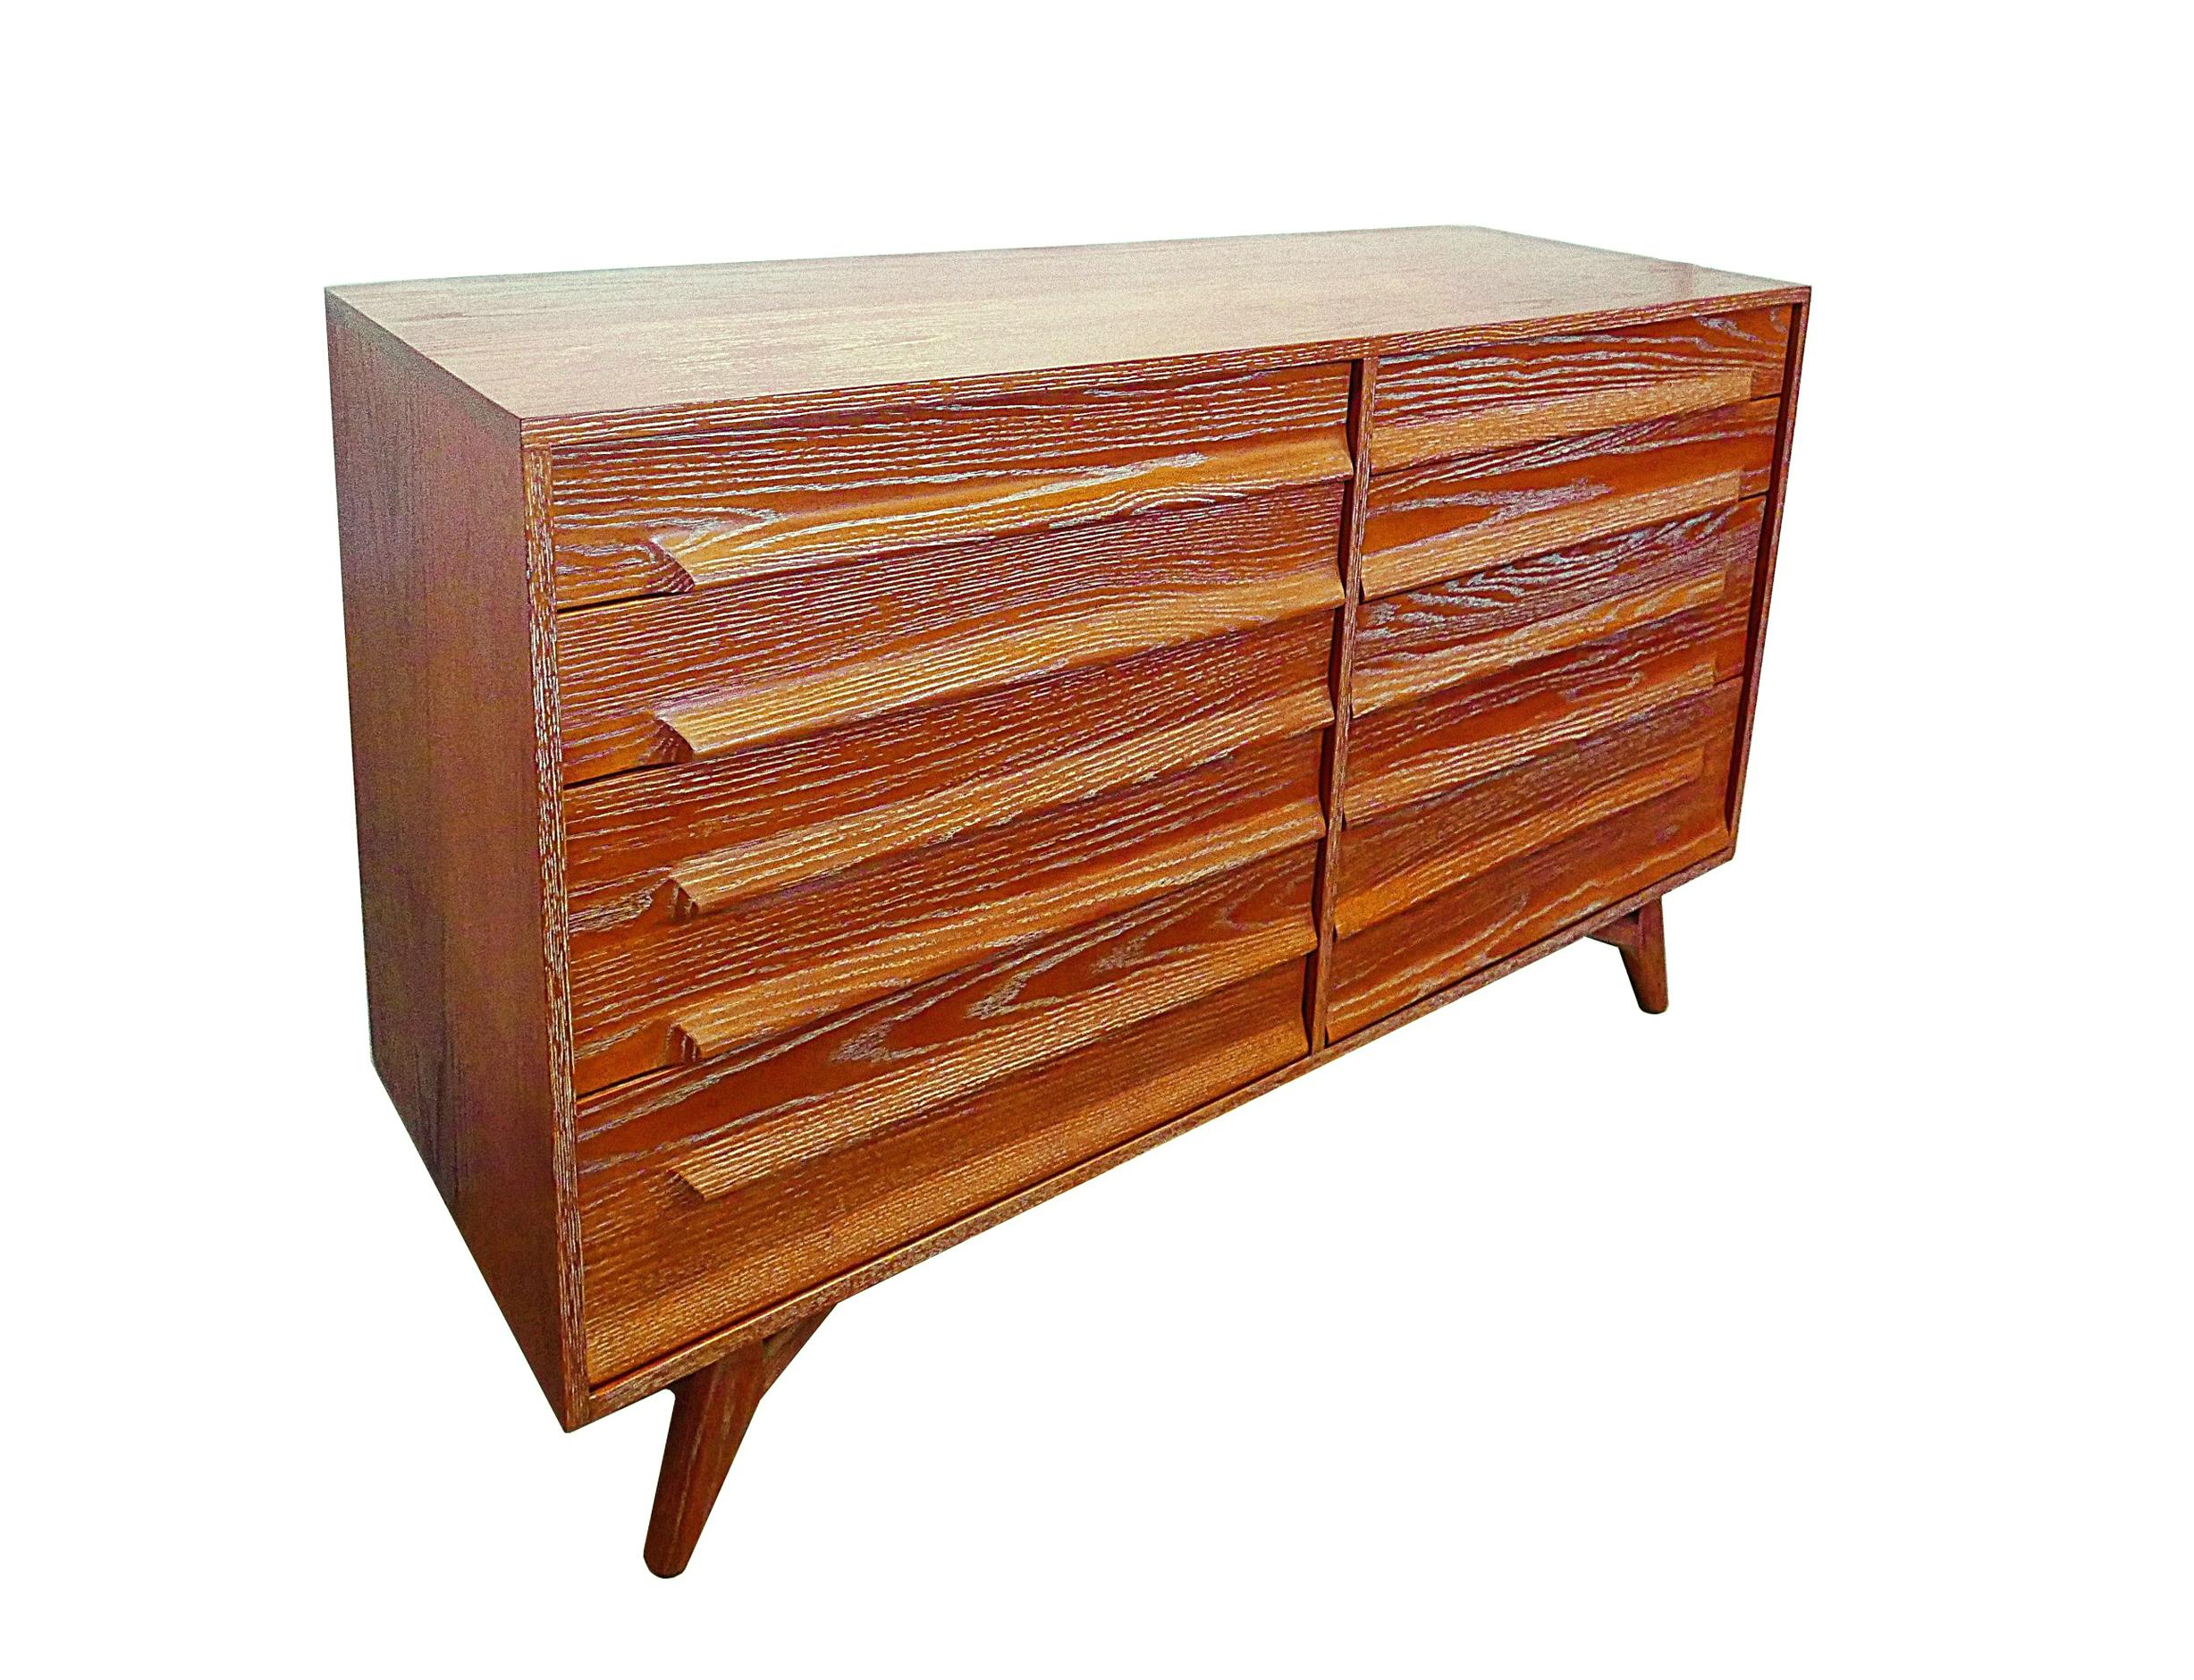 American modern eight drawer chest, Jack Van der Molen, Americana Casual Line by Jamestown Lounge.

